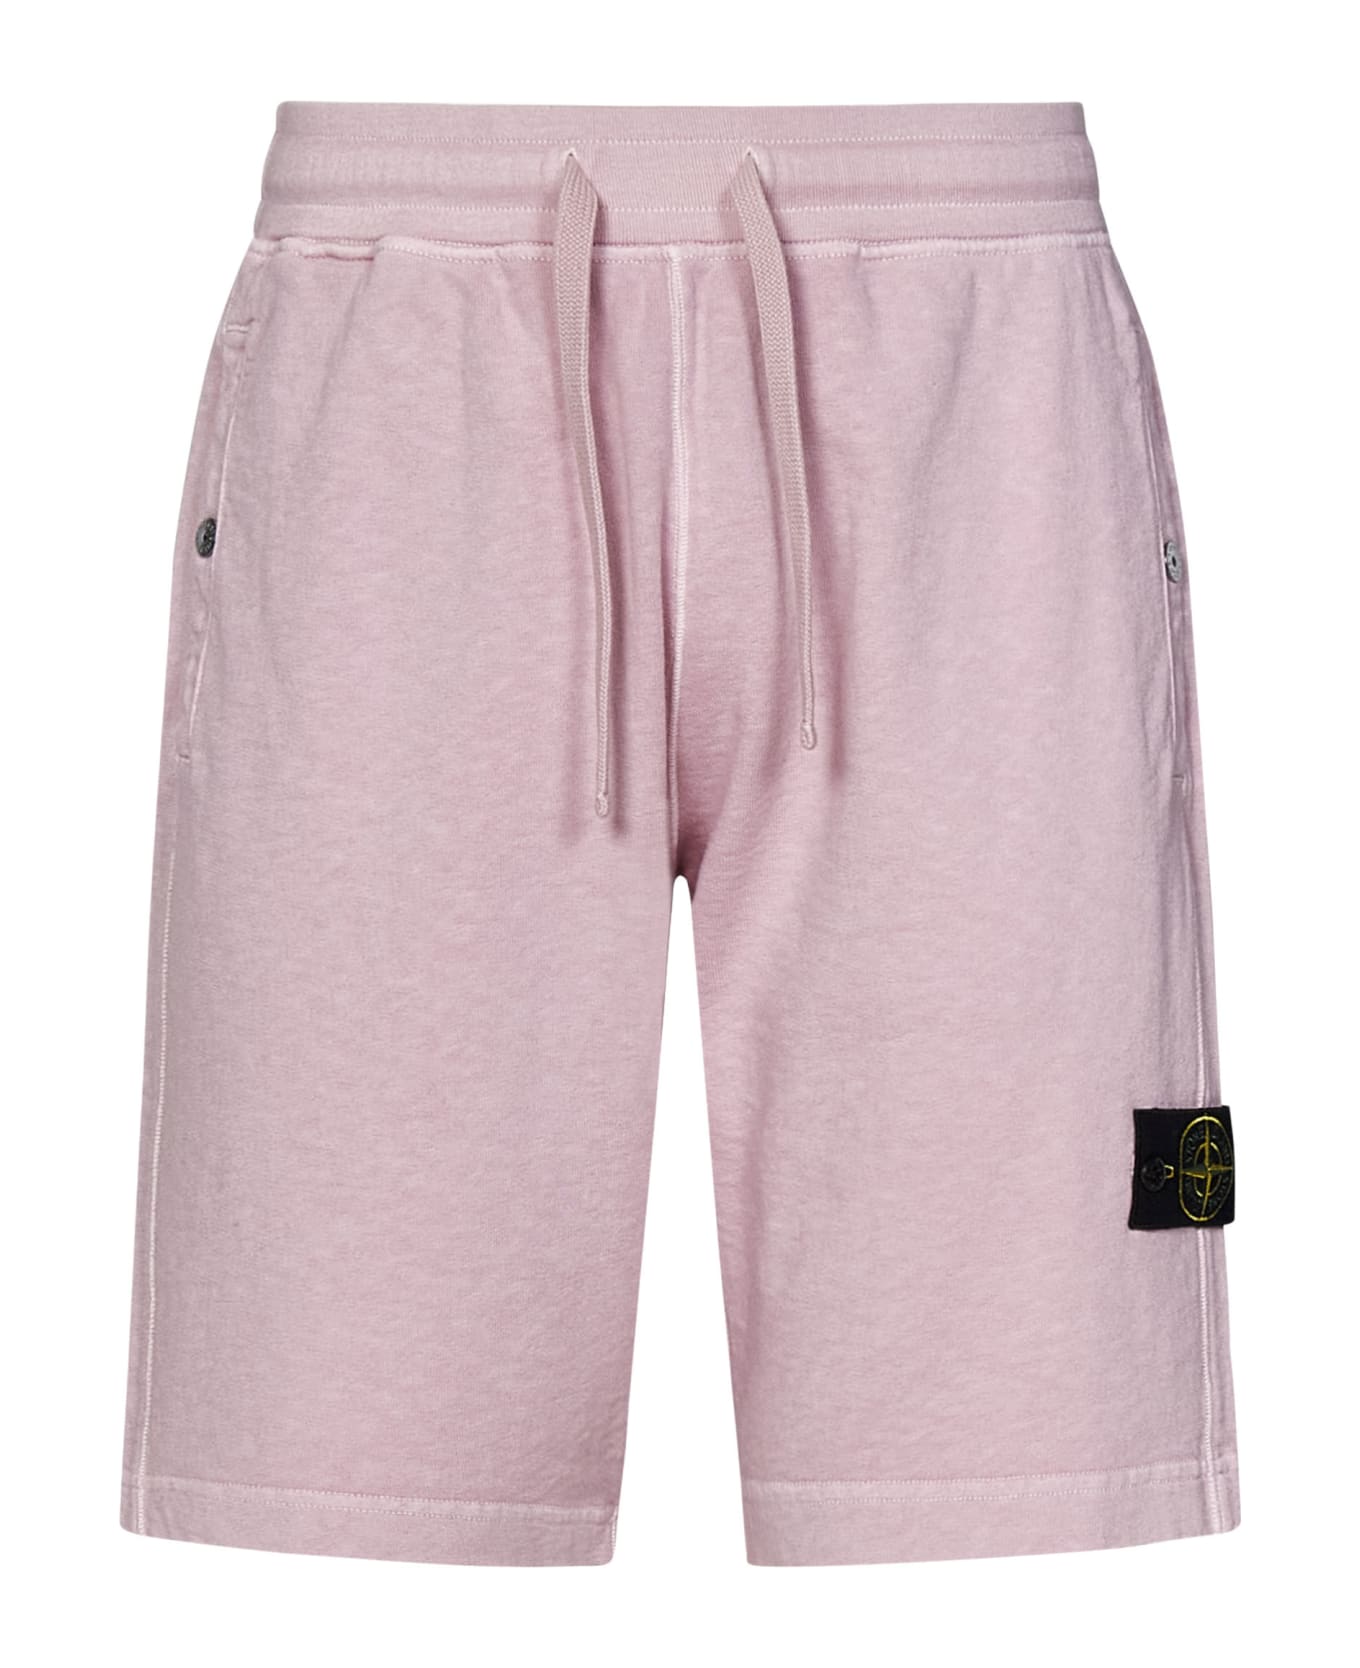 Stone Island Shorts - Pink